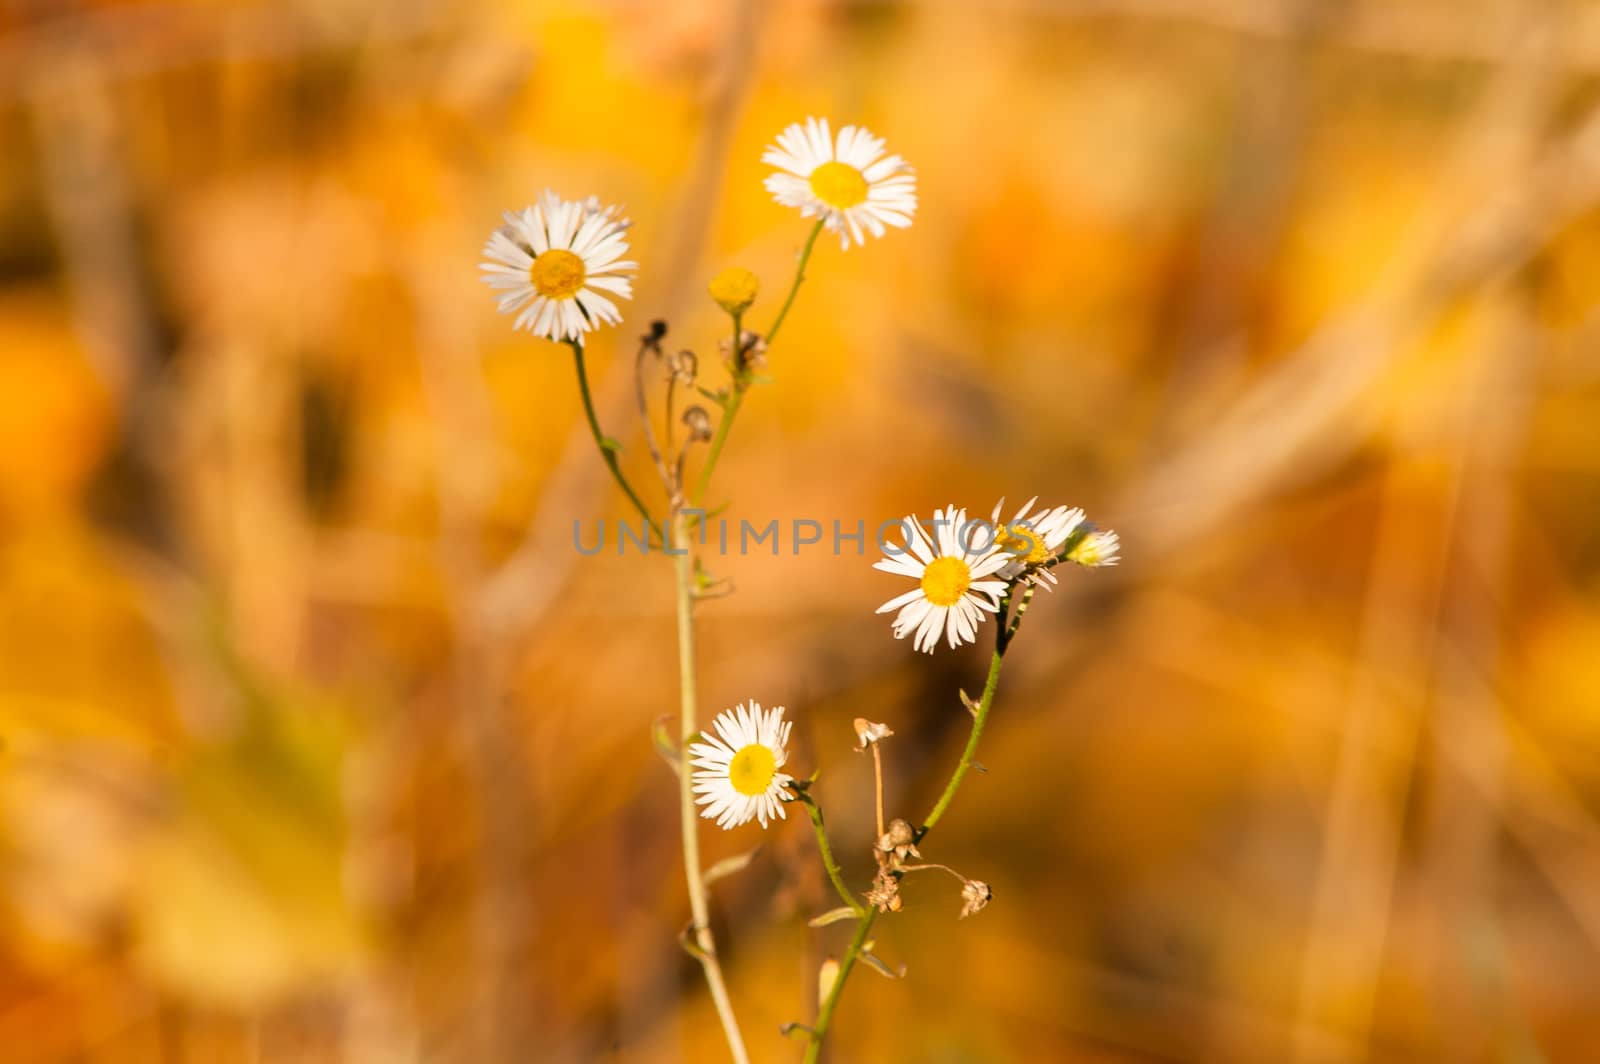 white daisy daisy yellow background by antonius_